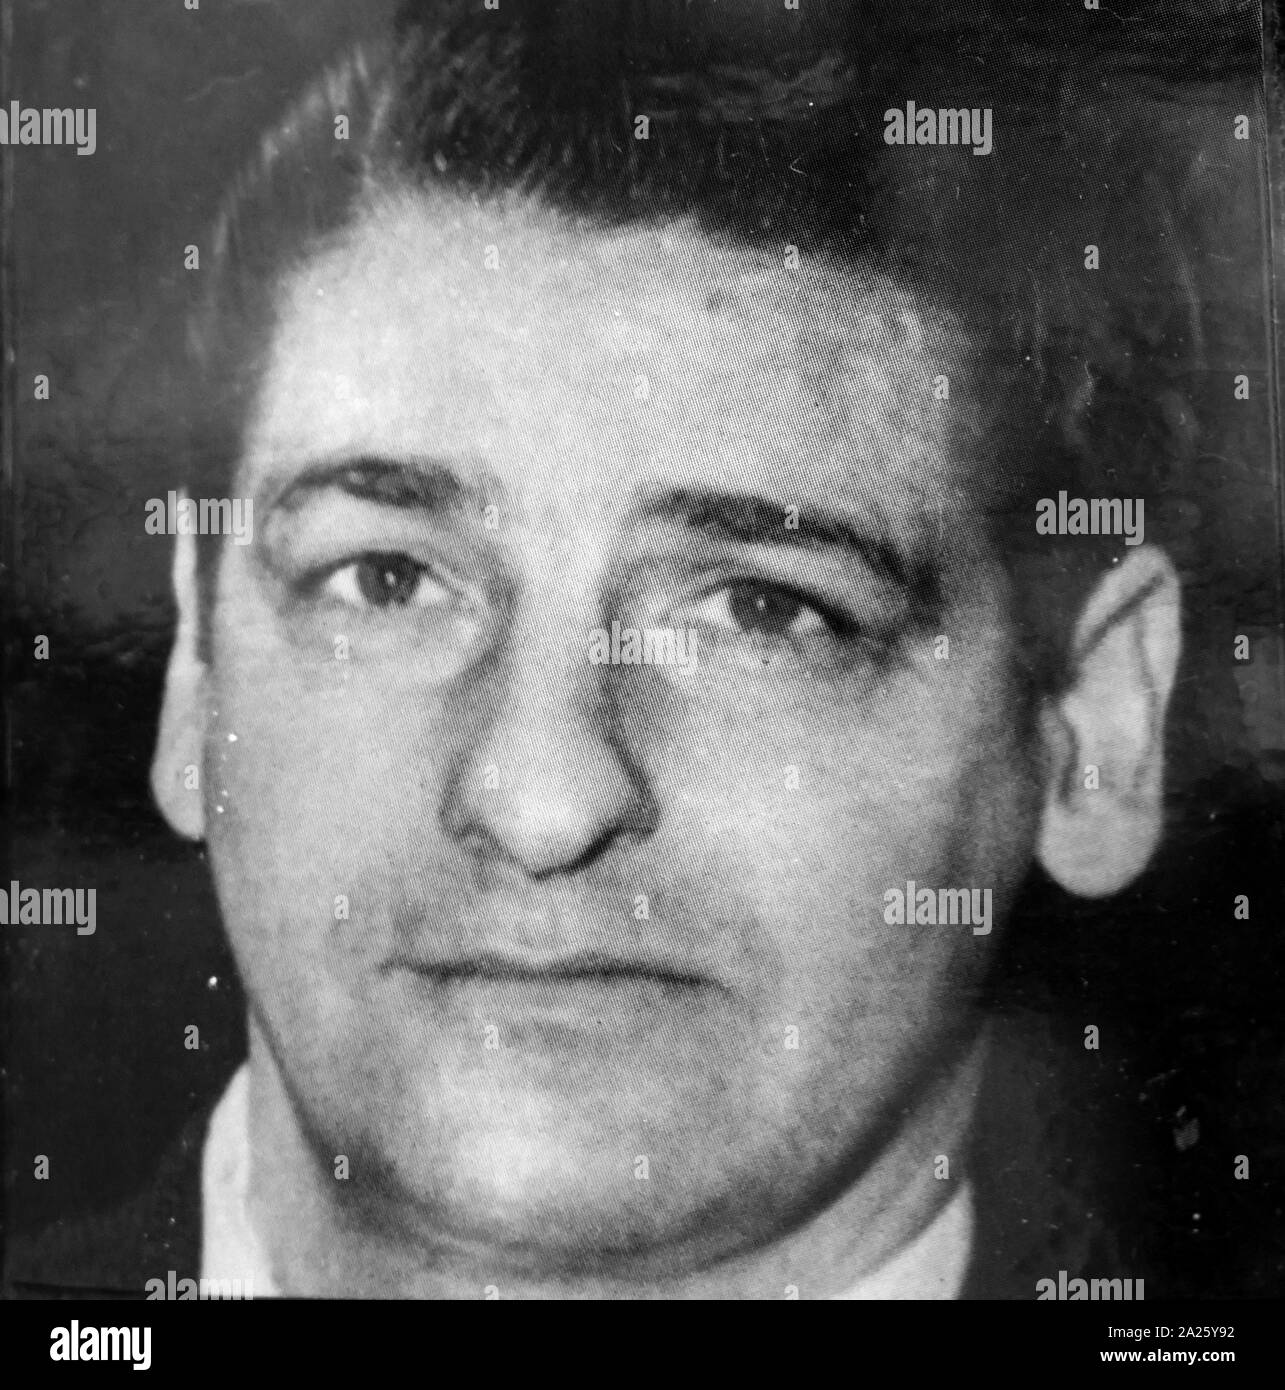 Photograph of Albert DeSalvo (The Boston Strangler). Alberto Henry DeSalvo (1931-1973) a criminal who confessed to being the "Boston Strangler" whom murdered 13 women in the Boston area from 1962 to 1964 Stock Photo